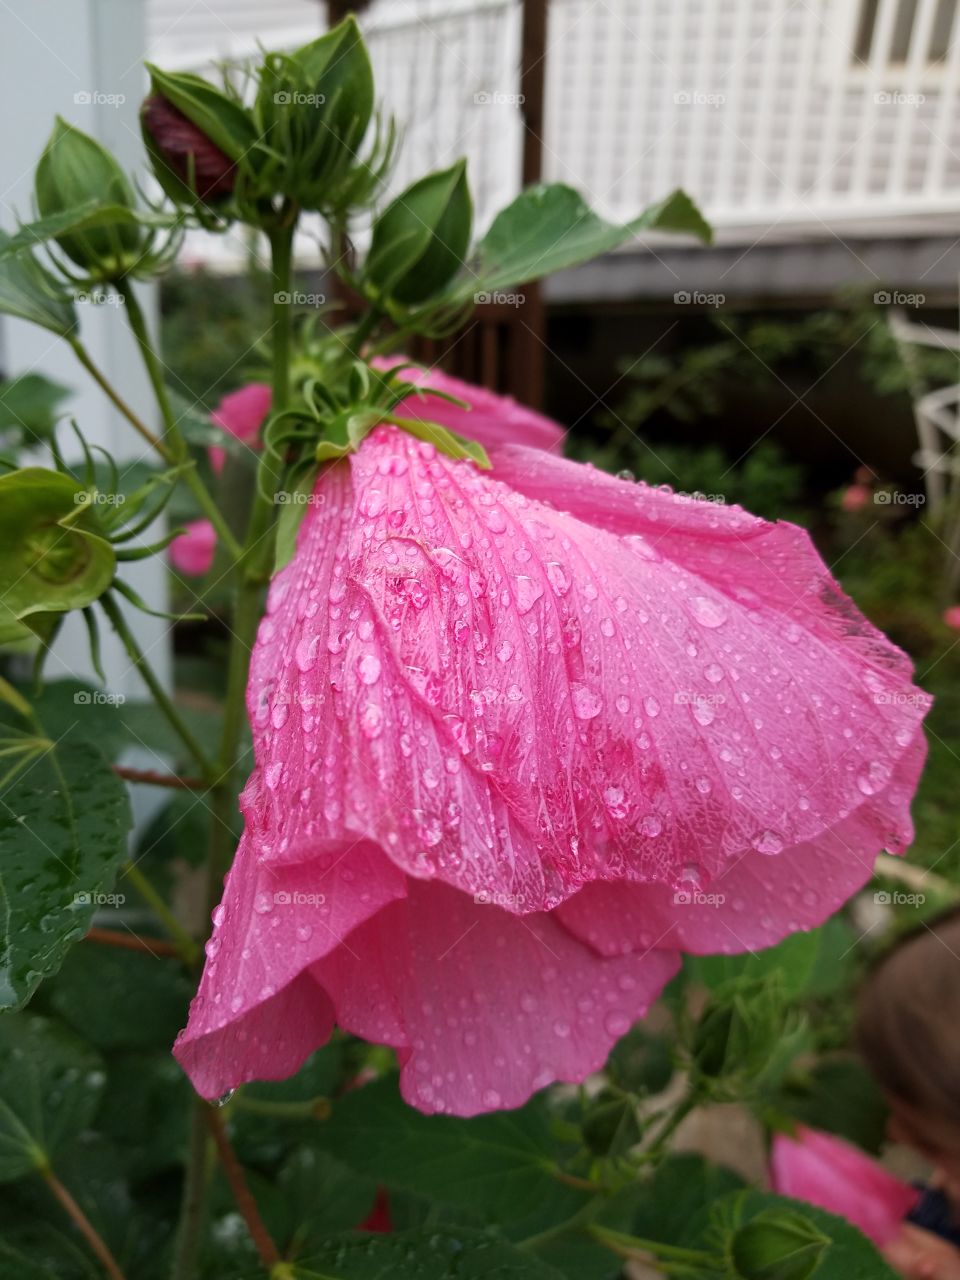 hibiscus after rain